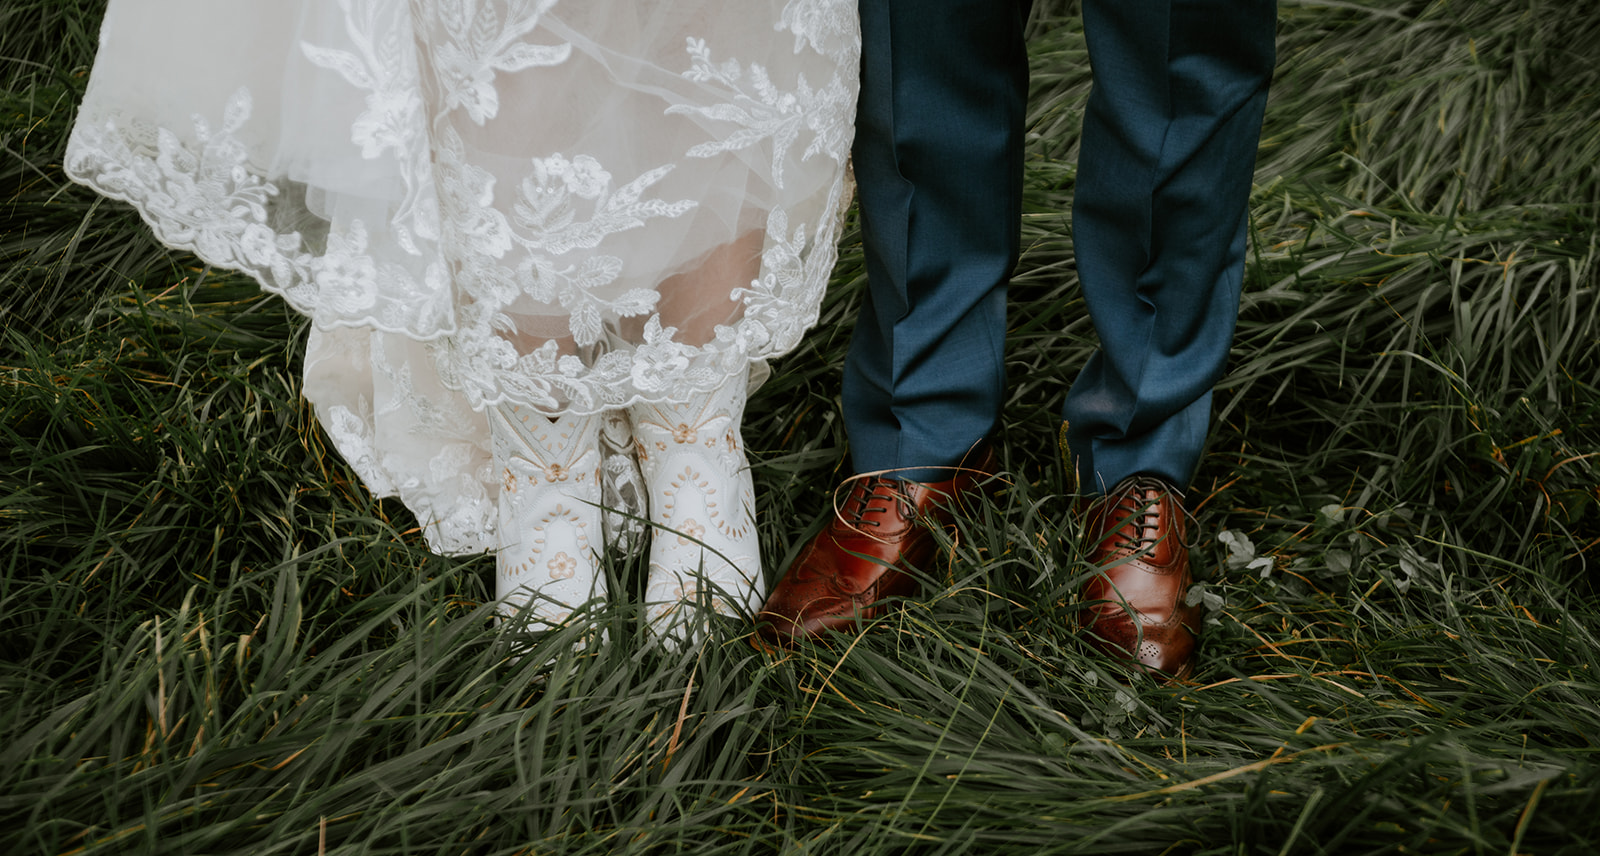 Country bridge and groom wedding boots 